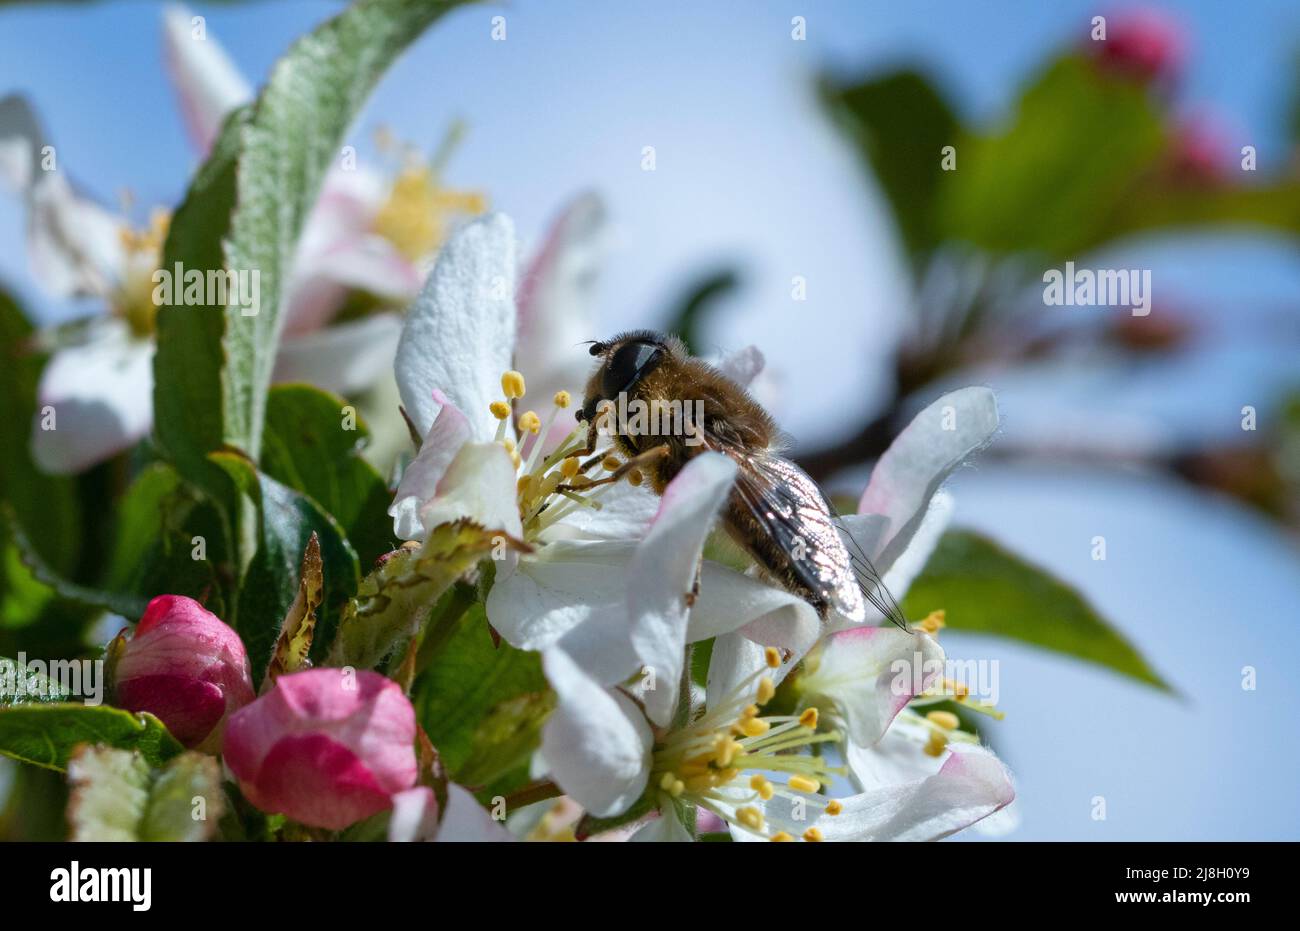 Eristalis pertinax hoverfly on crab apple blossom Stock Photo